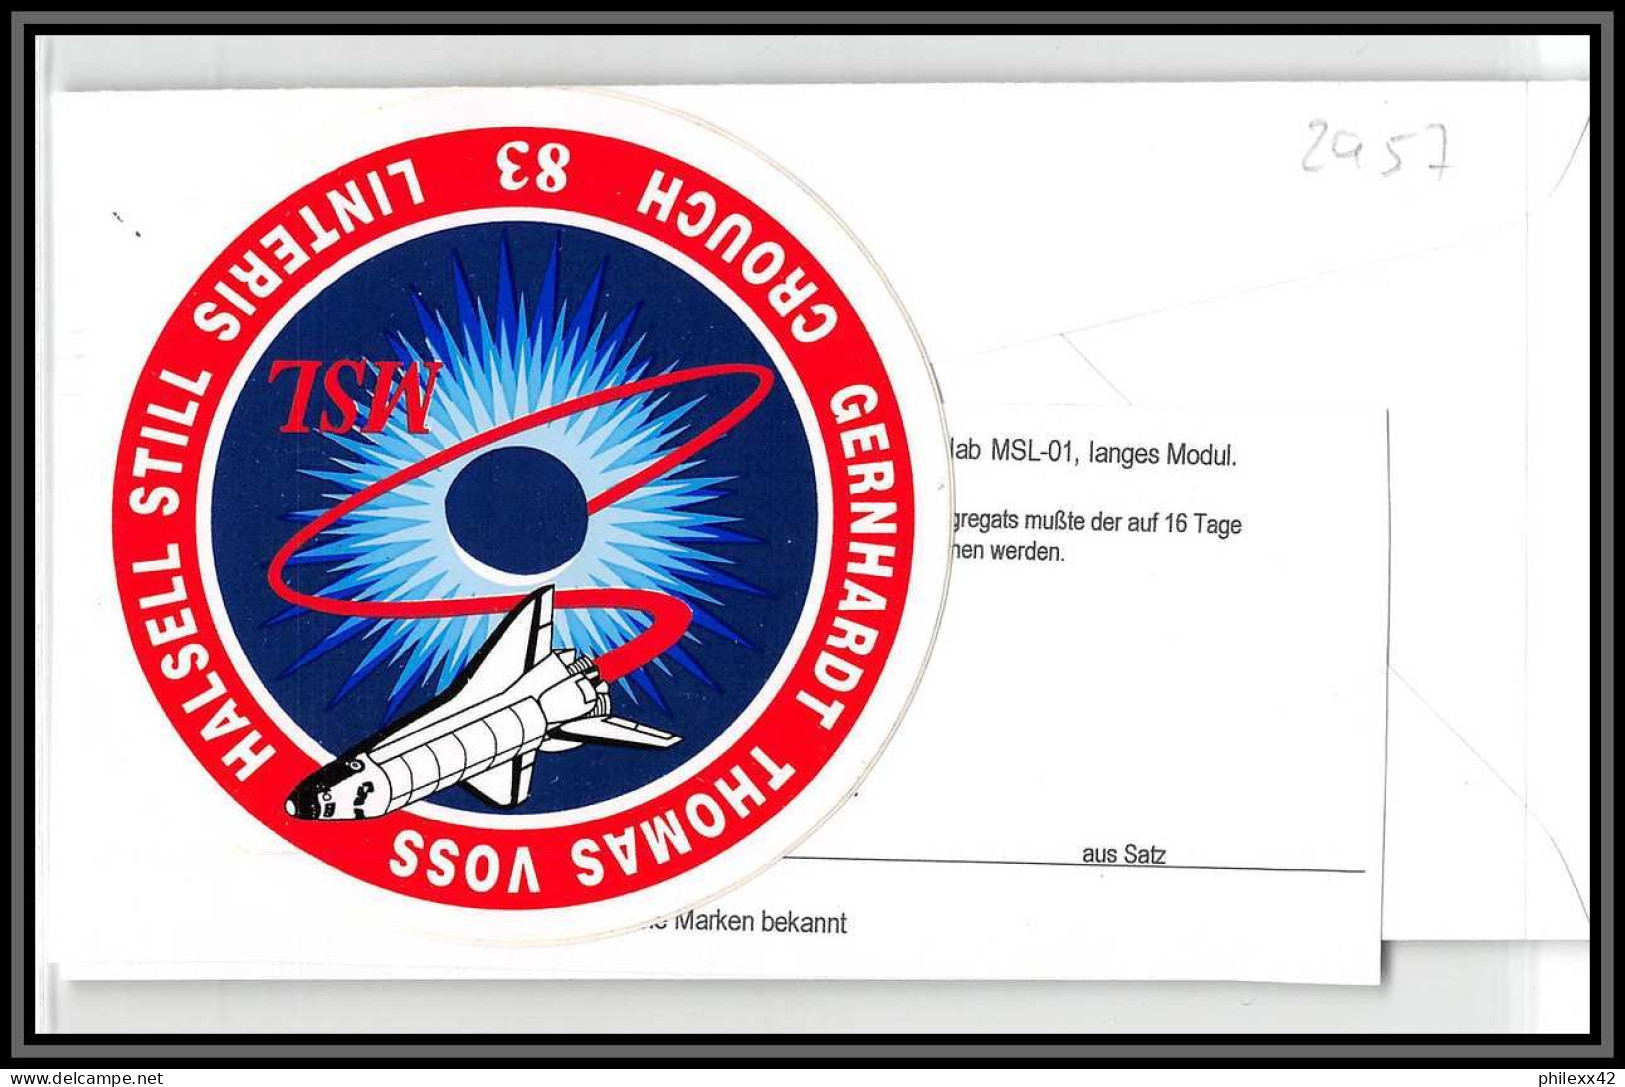 2957 Espace (space) Lettre (cover) USA Start Sts - 83 Columbia Shuttle (navette) 4/4/1997 + Stickers (autocollant) - Stati Uniti